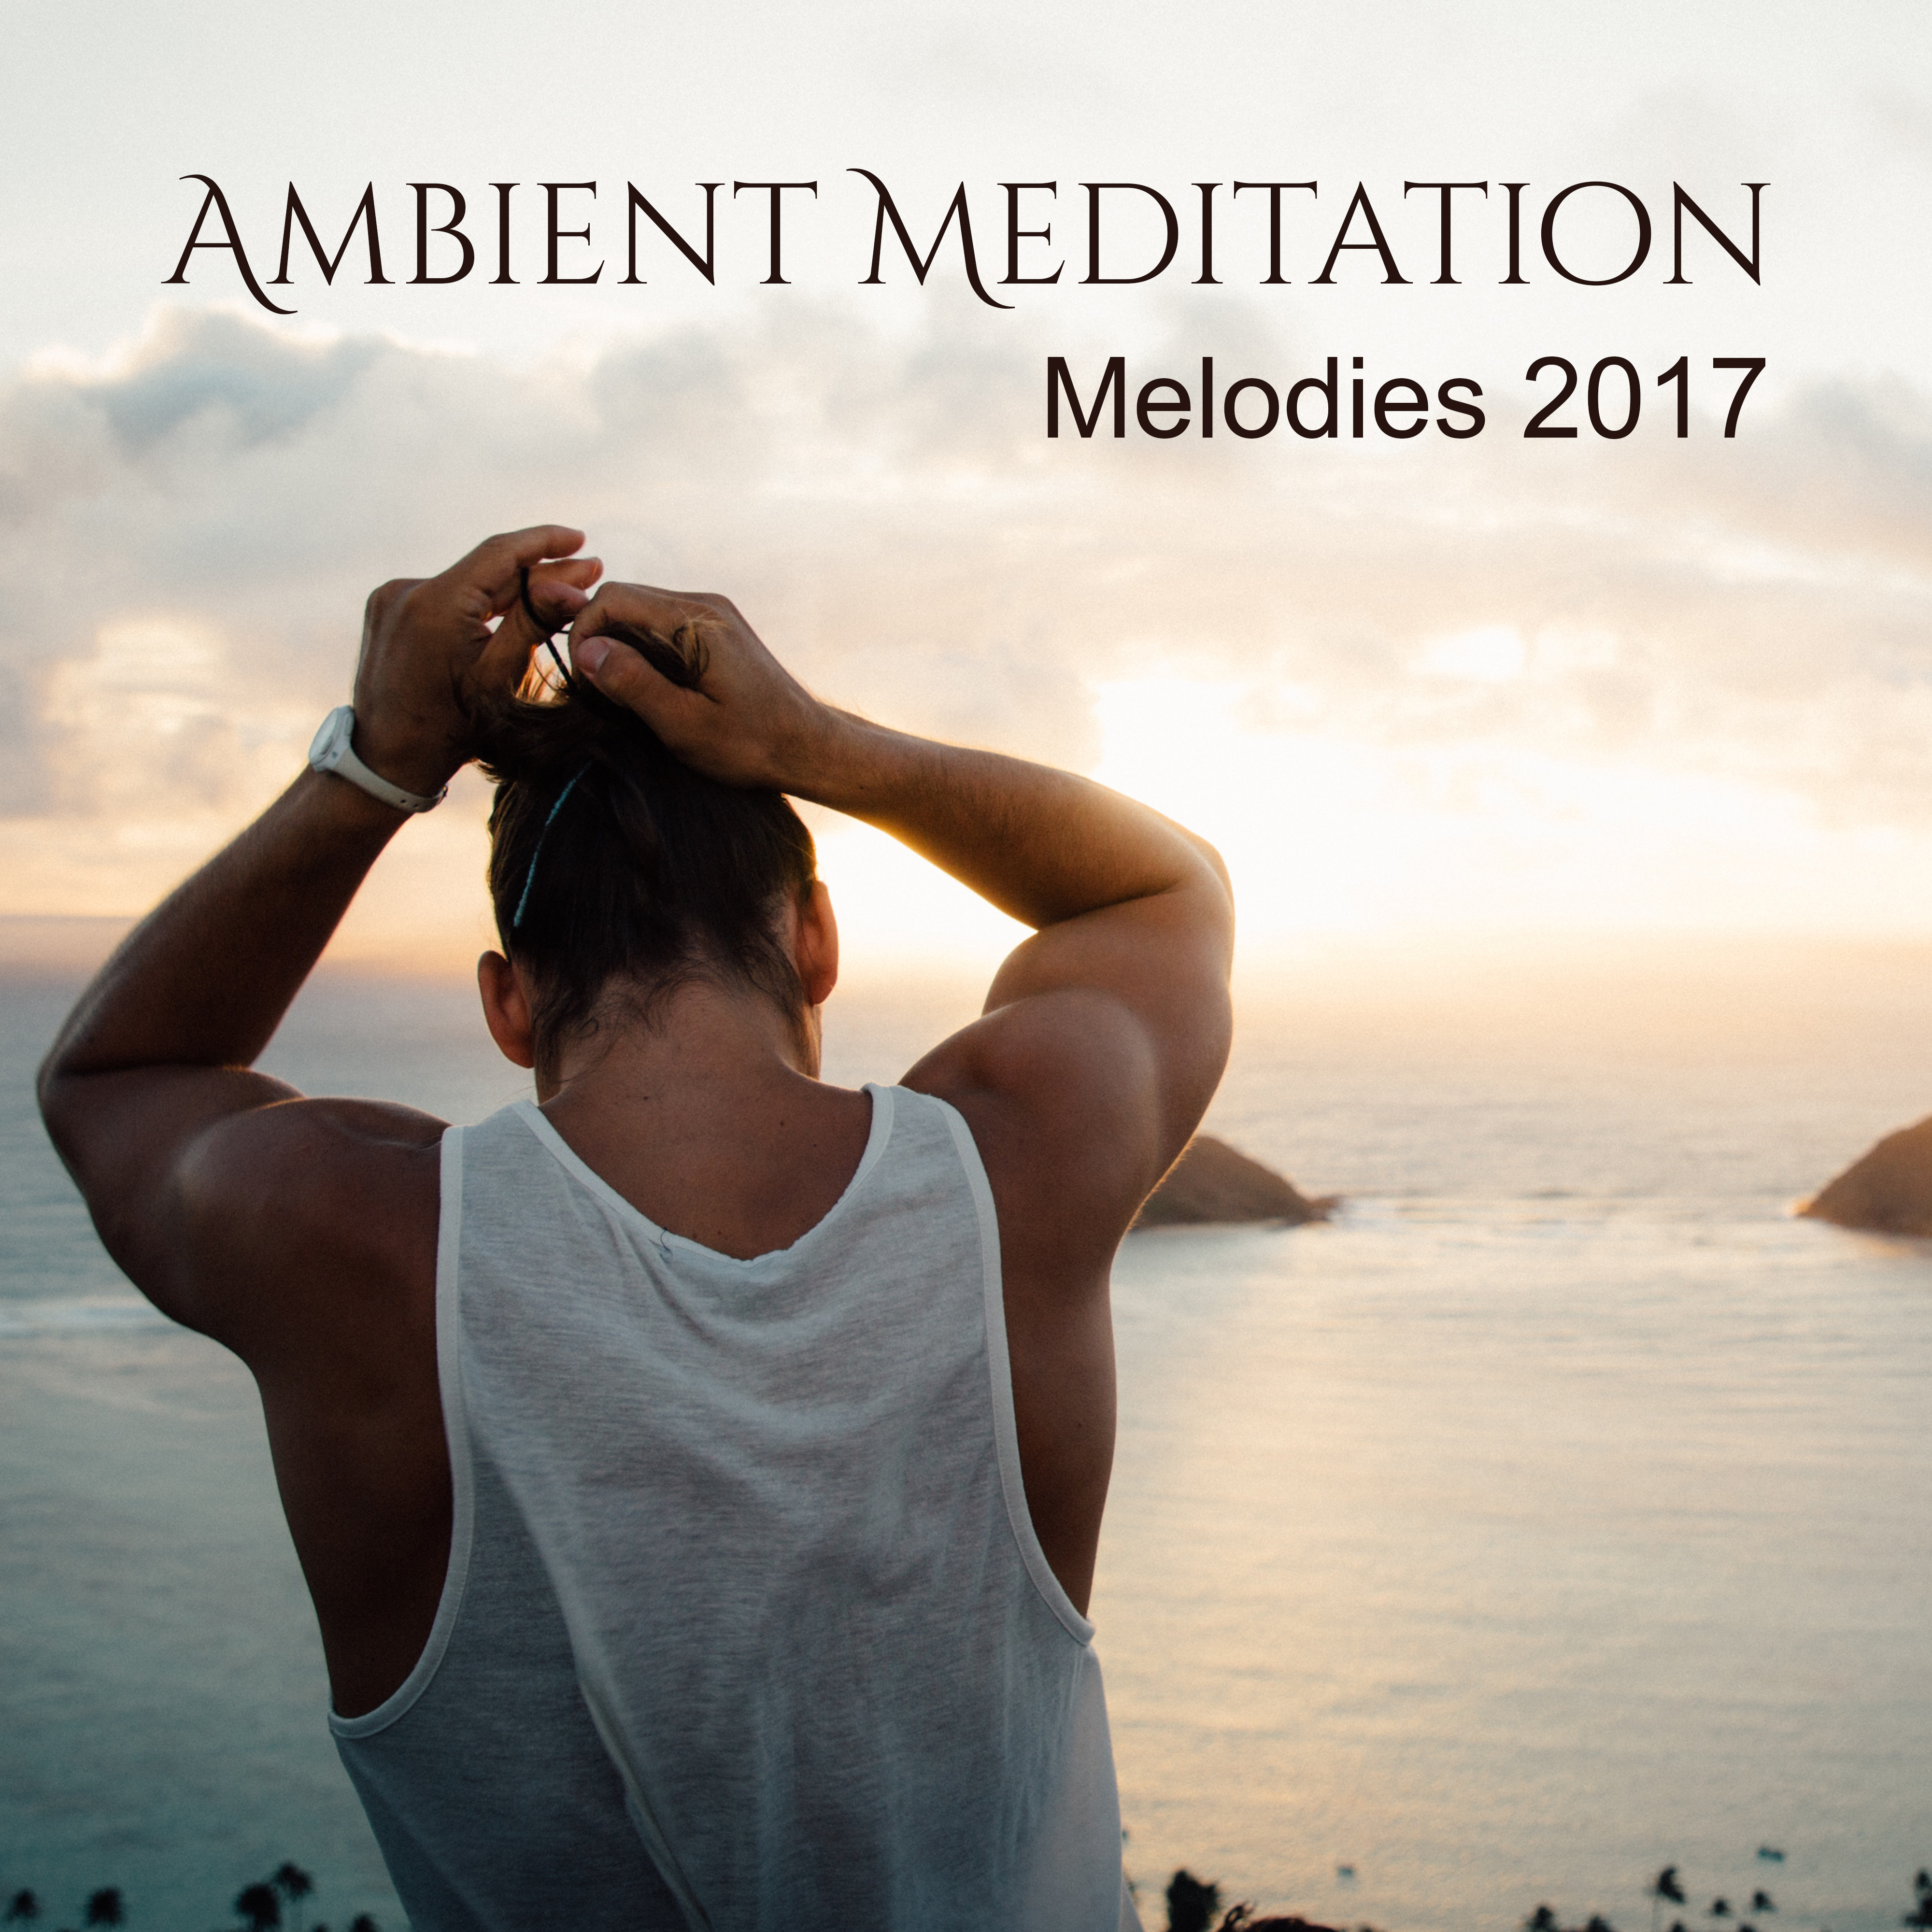 Ambient Meditation Melodies 2017